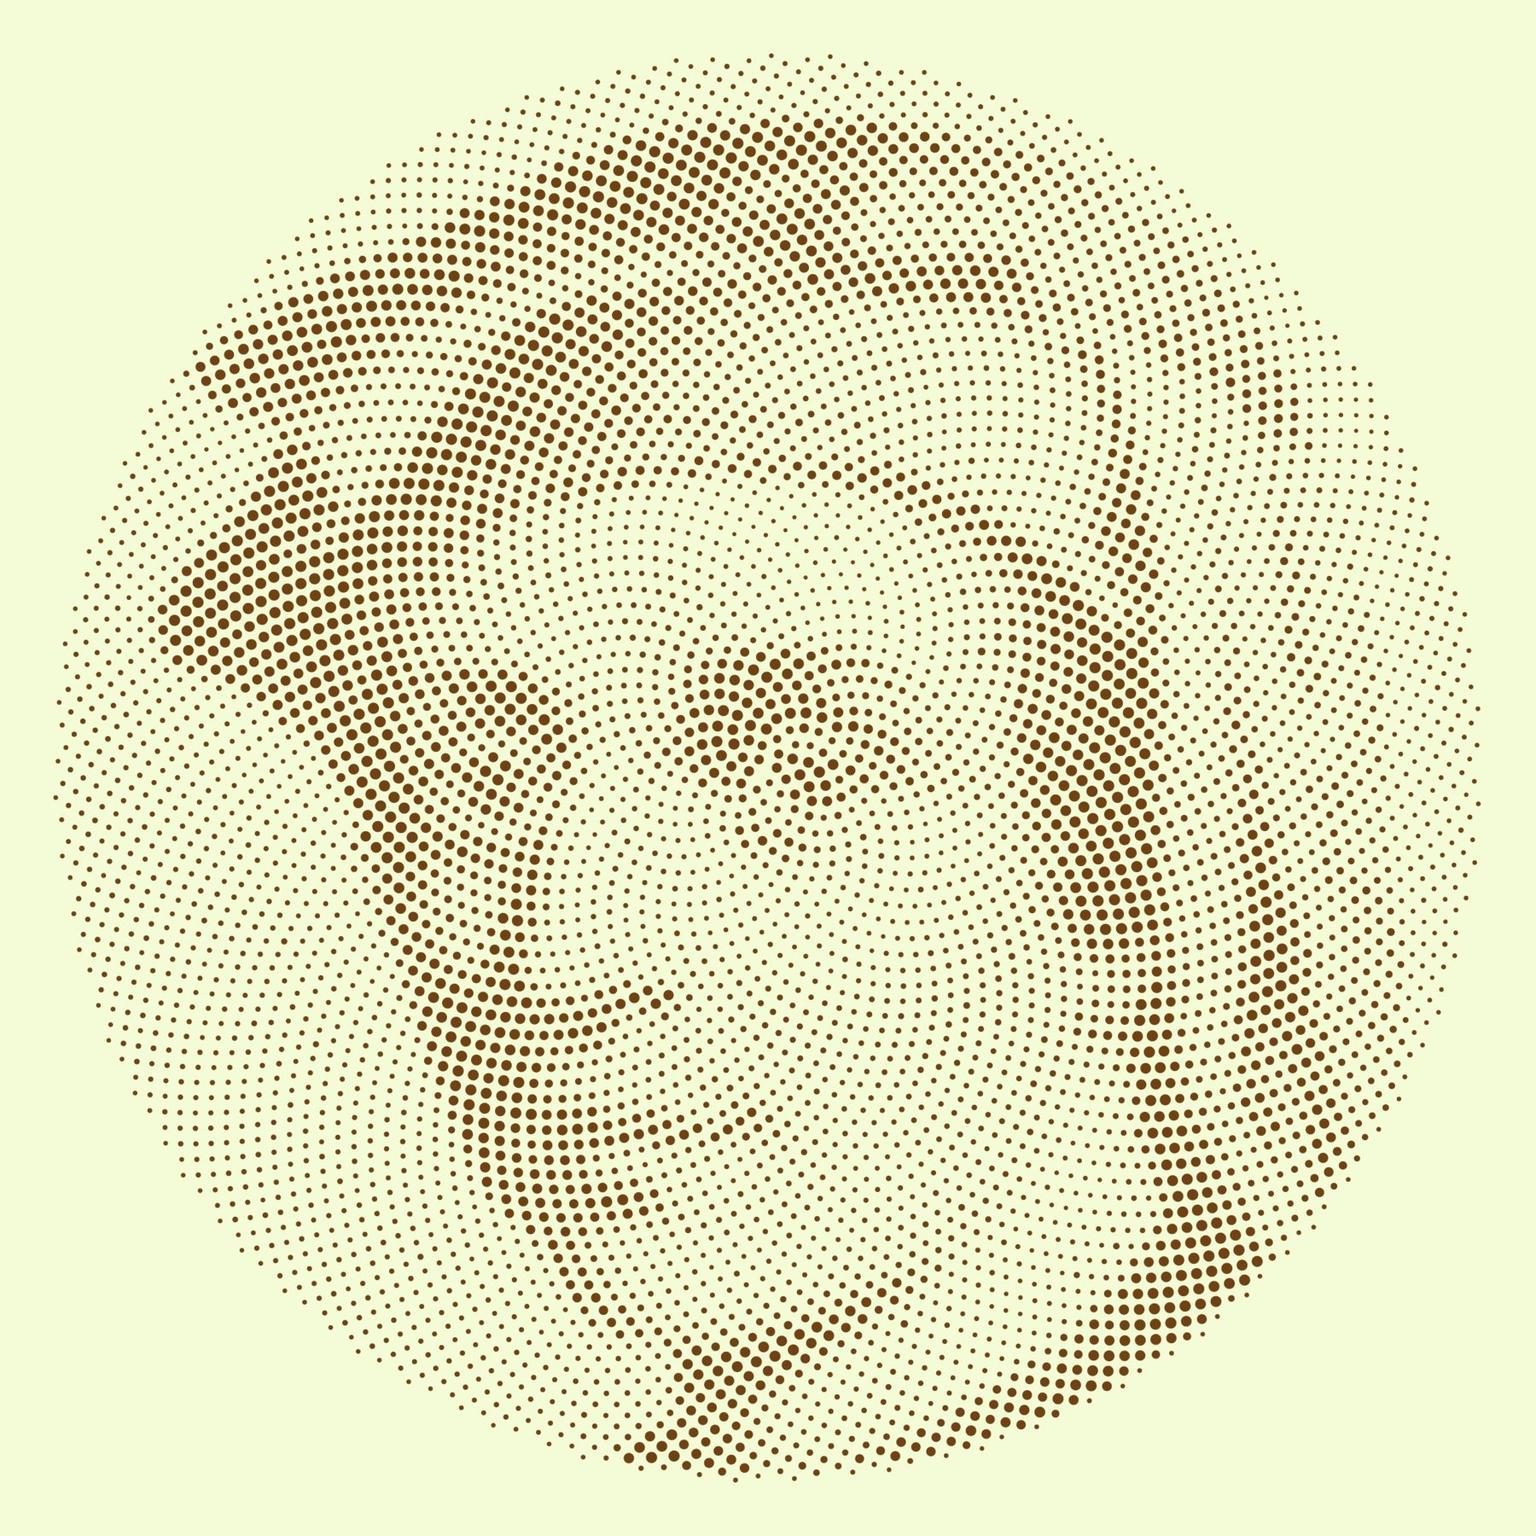 Image for entry 'Phyllotactic Portrait of Fibonacci'